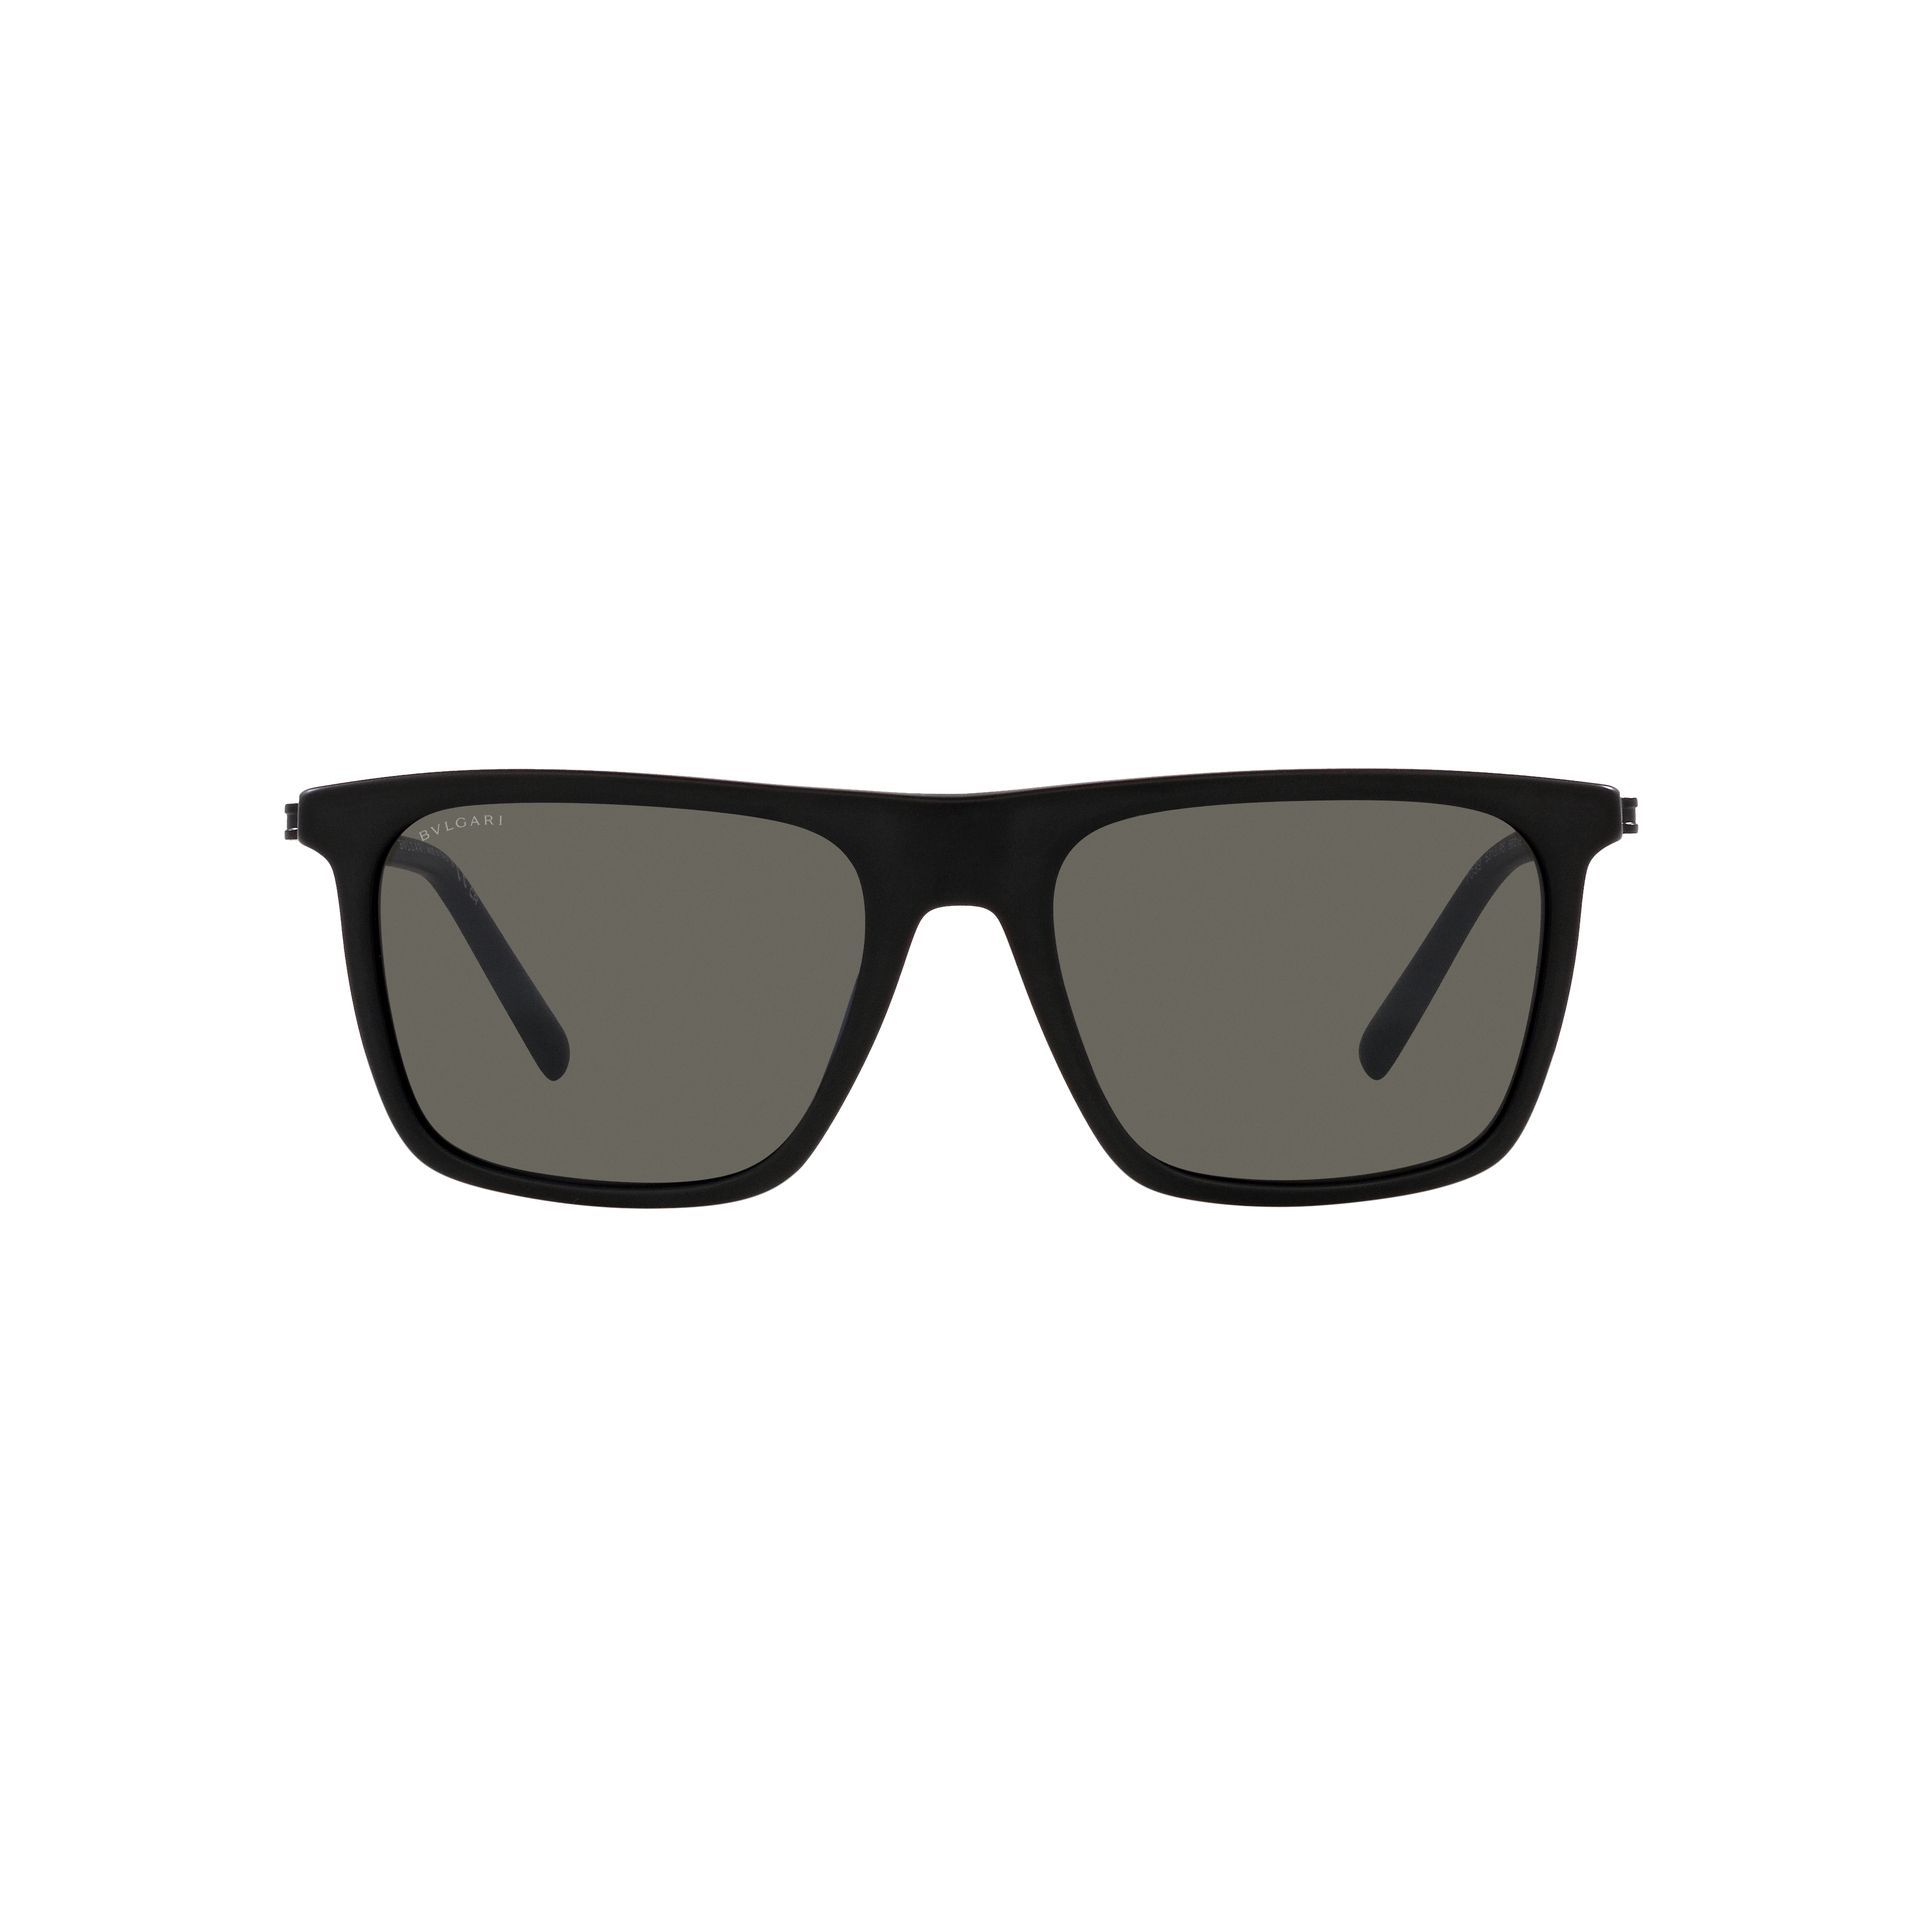 0BV7039 Square Sunglasses 5313R5 - size 56